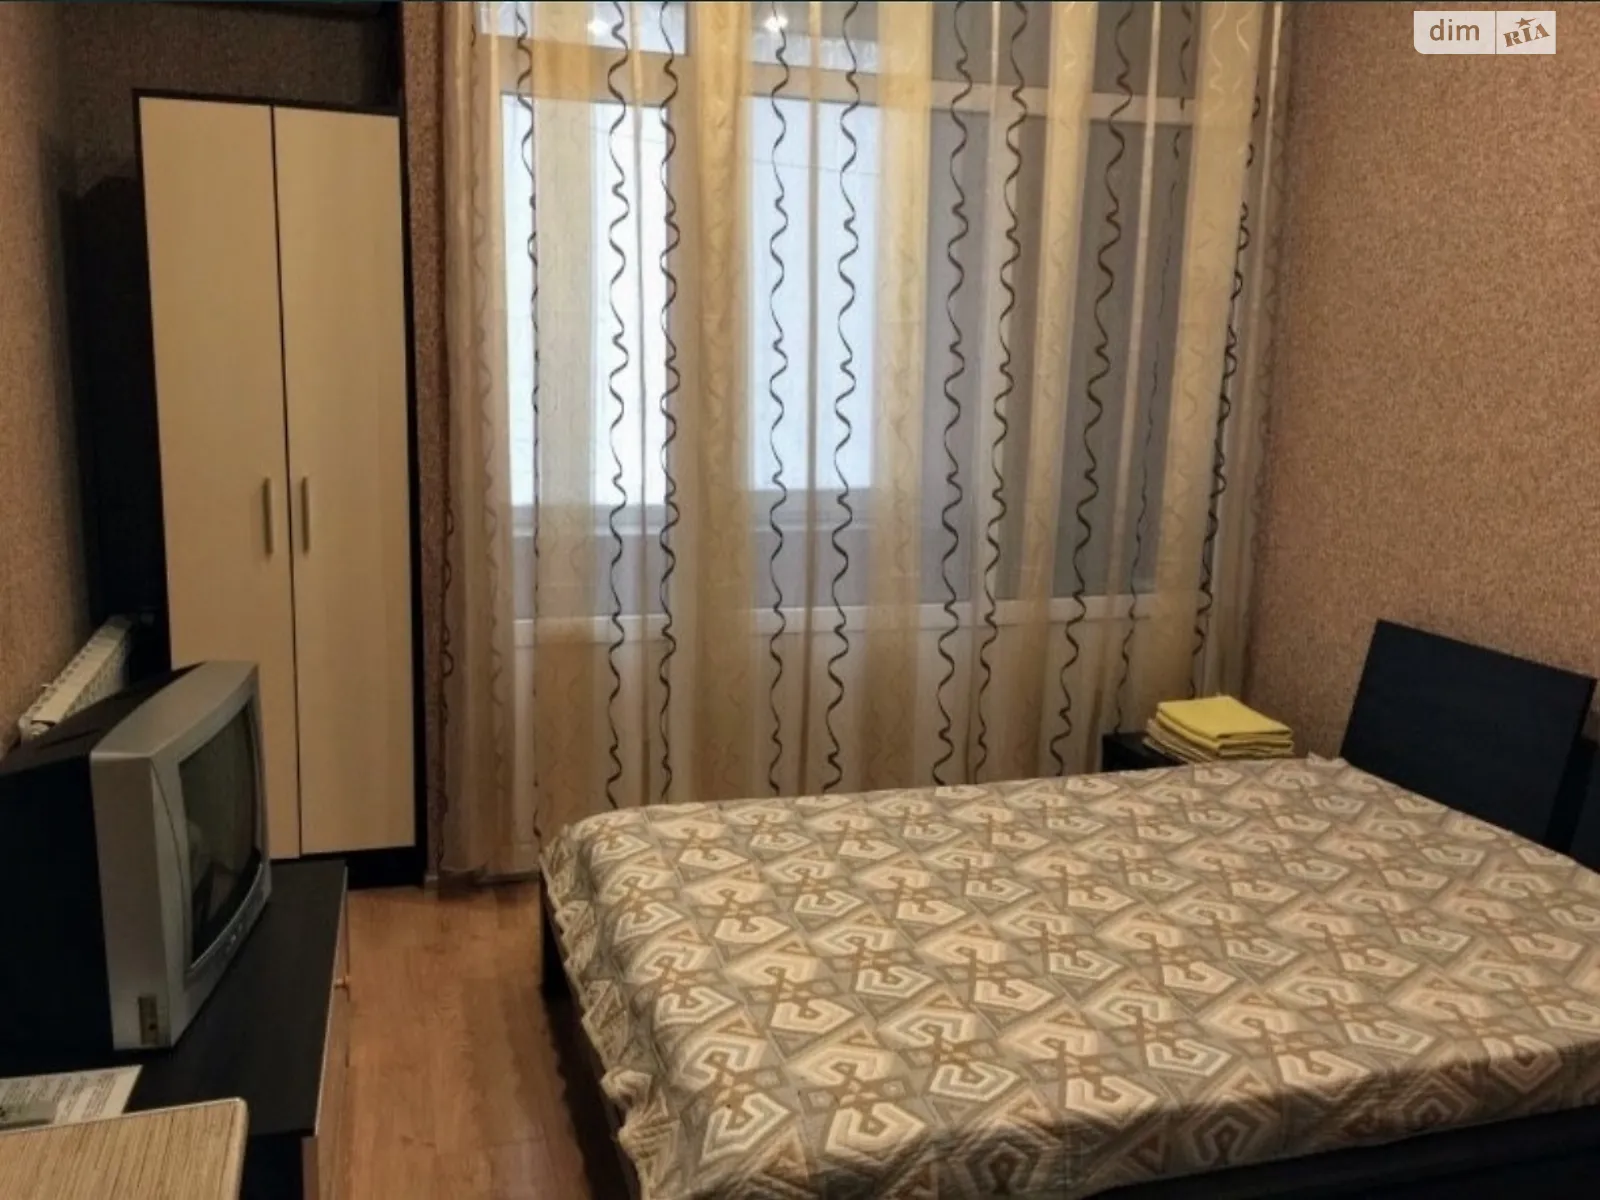 1-кімнатна квартира у Запоріжжі, цена: 490 грн